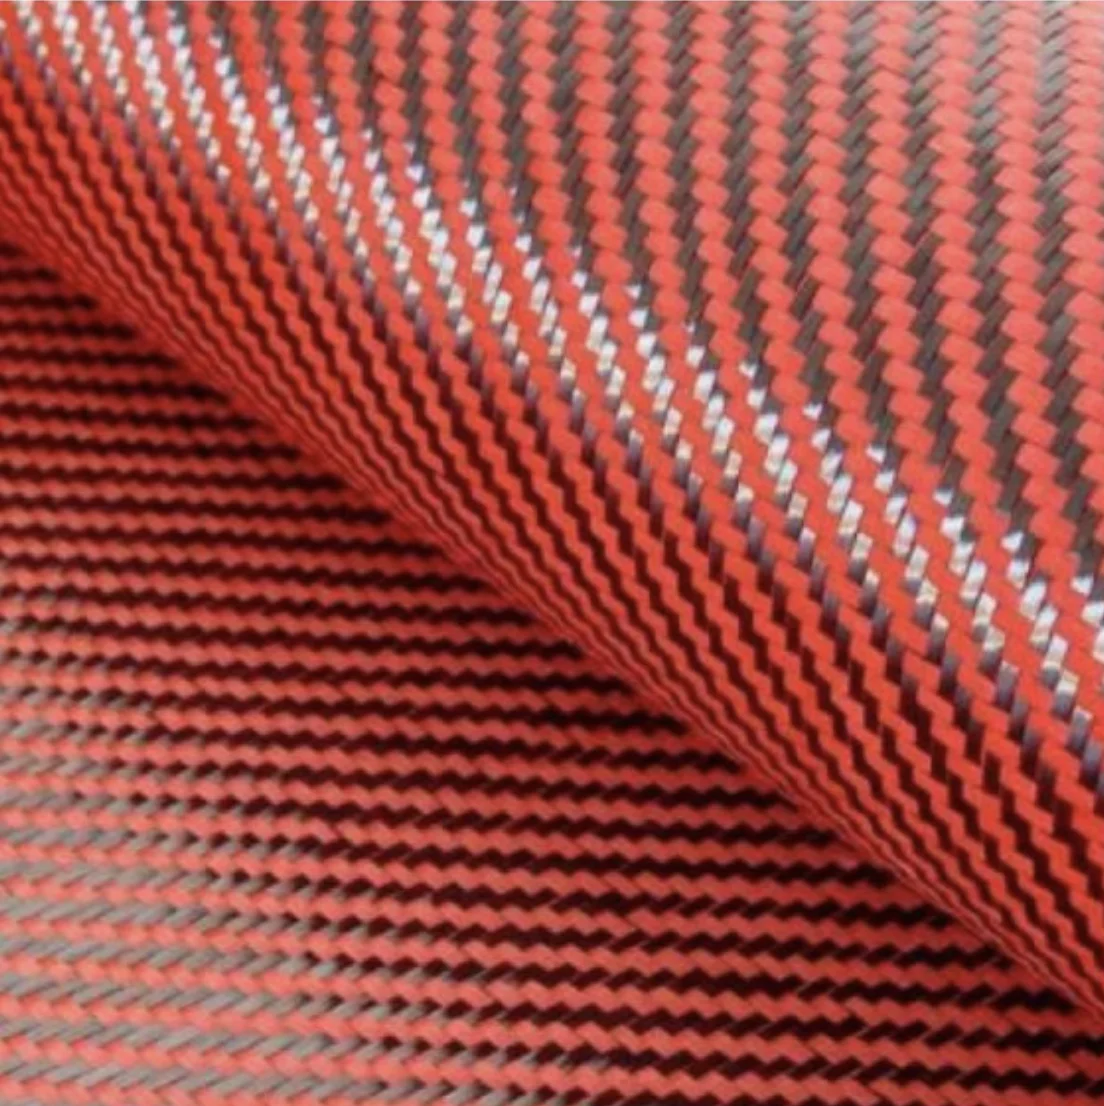 12K Toray T700 Aramid Carbon Fiber Hybrid Plain Weave Fabric for Airplane Fuselage